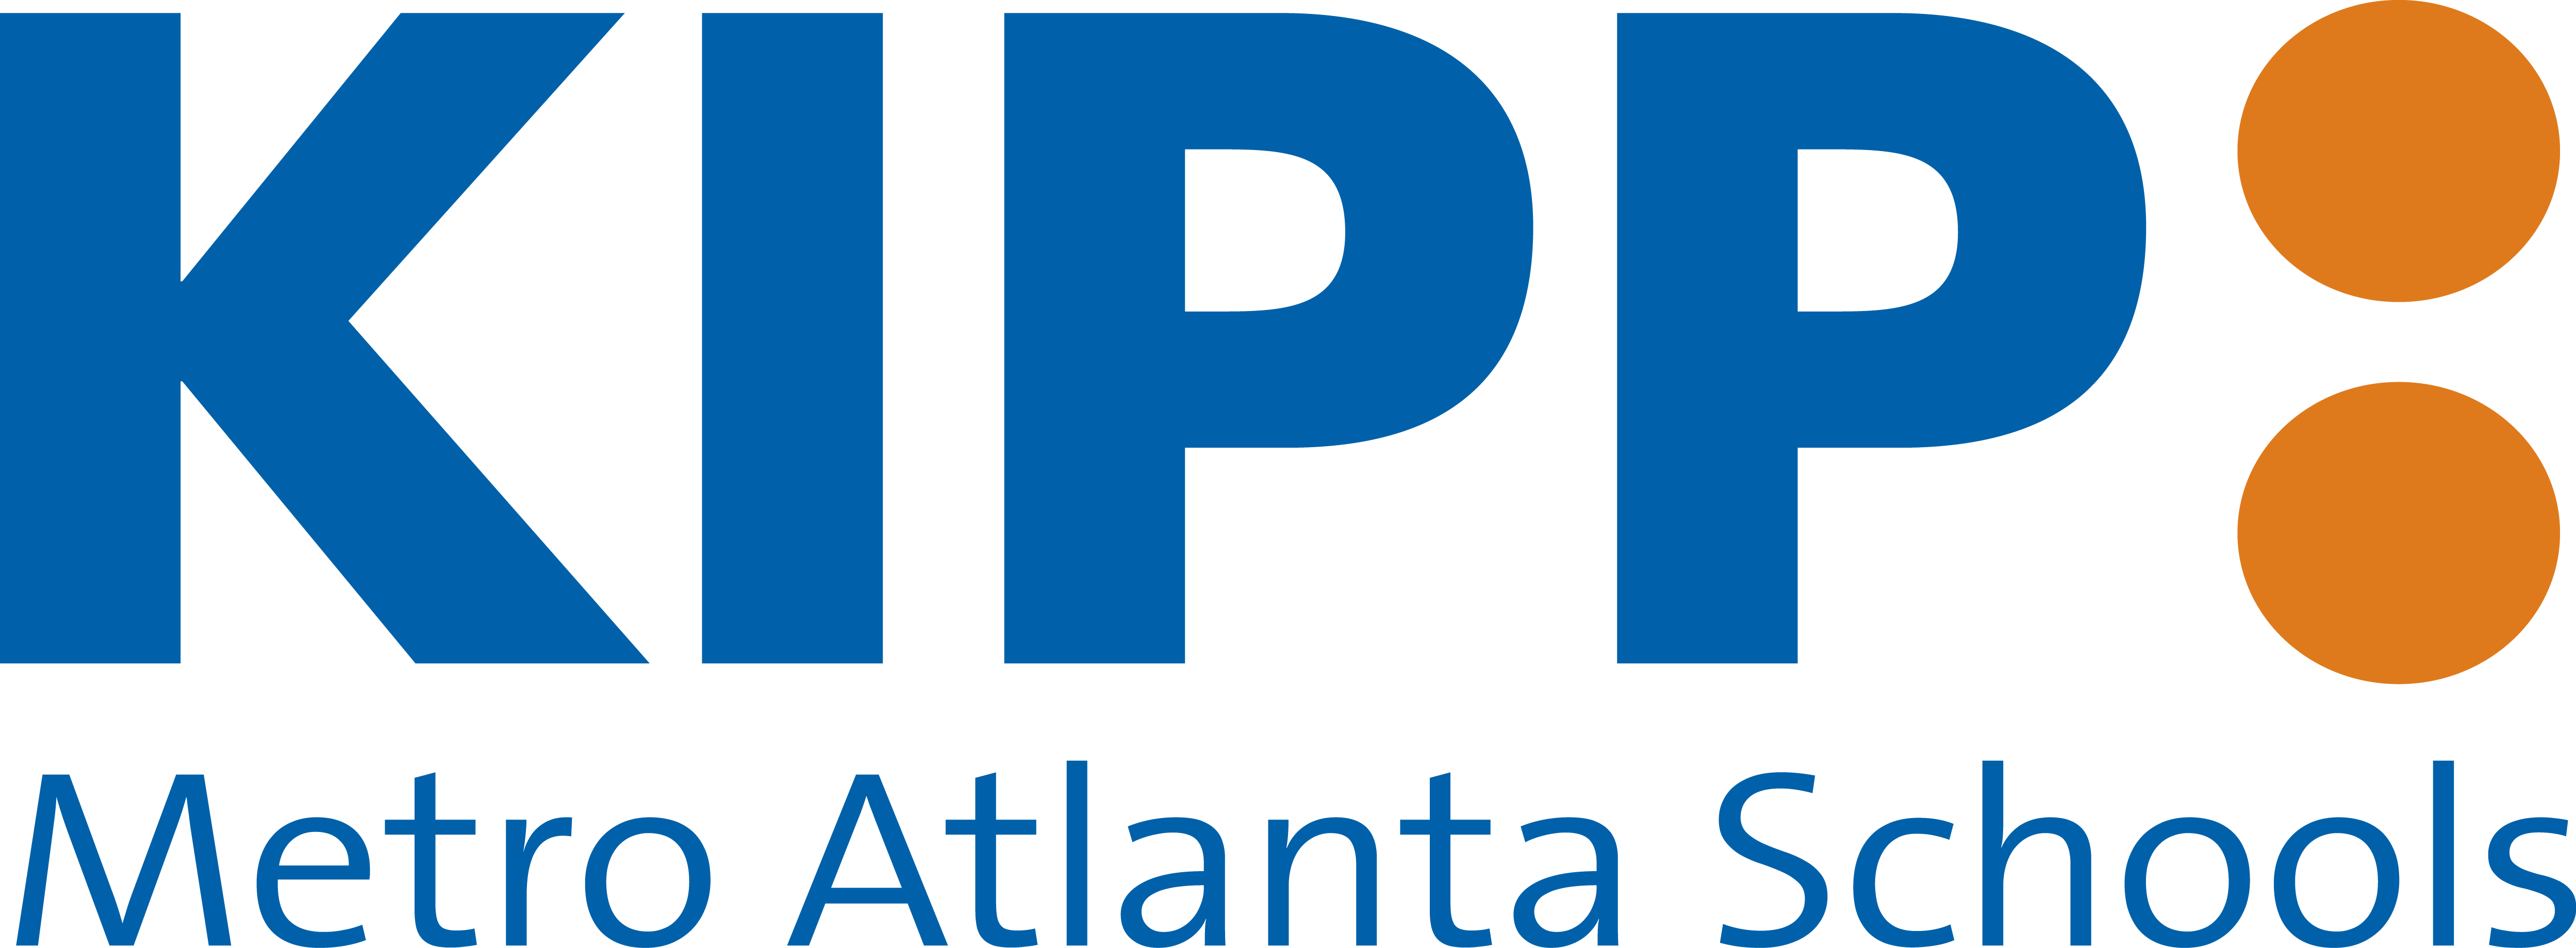 Kipp Logo - Kendeda Fund Education in Atlanta. KIPP Metro Atlanta Schools